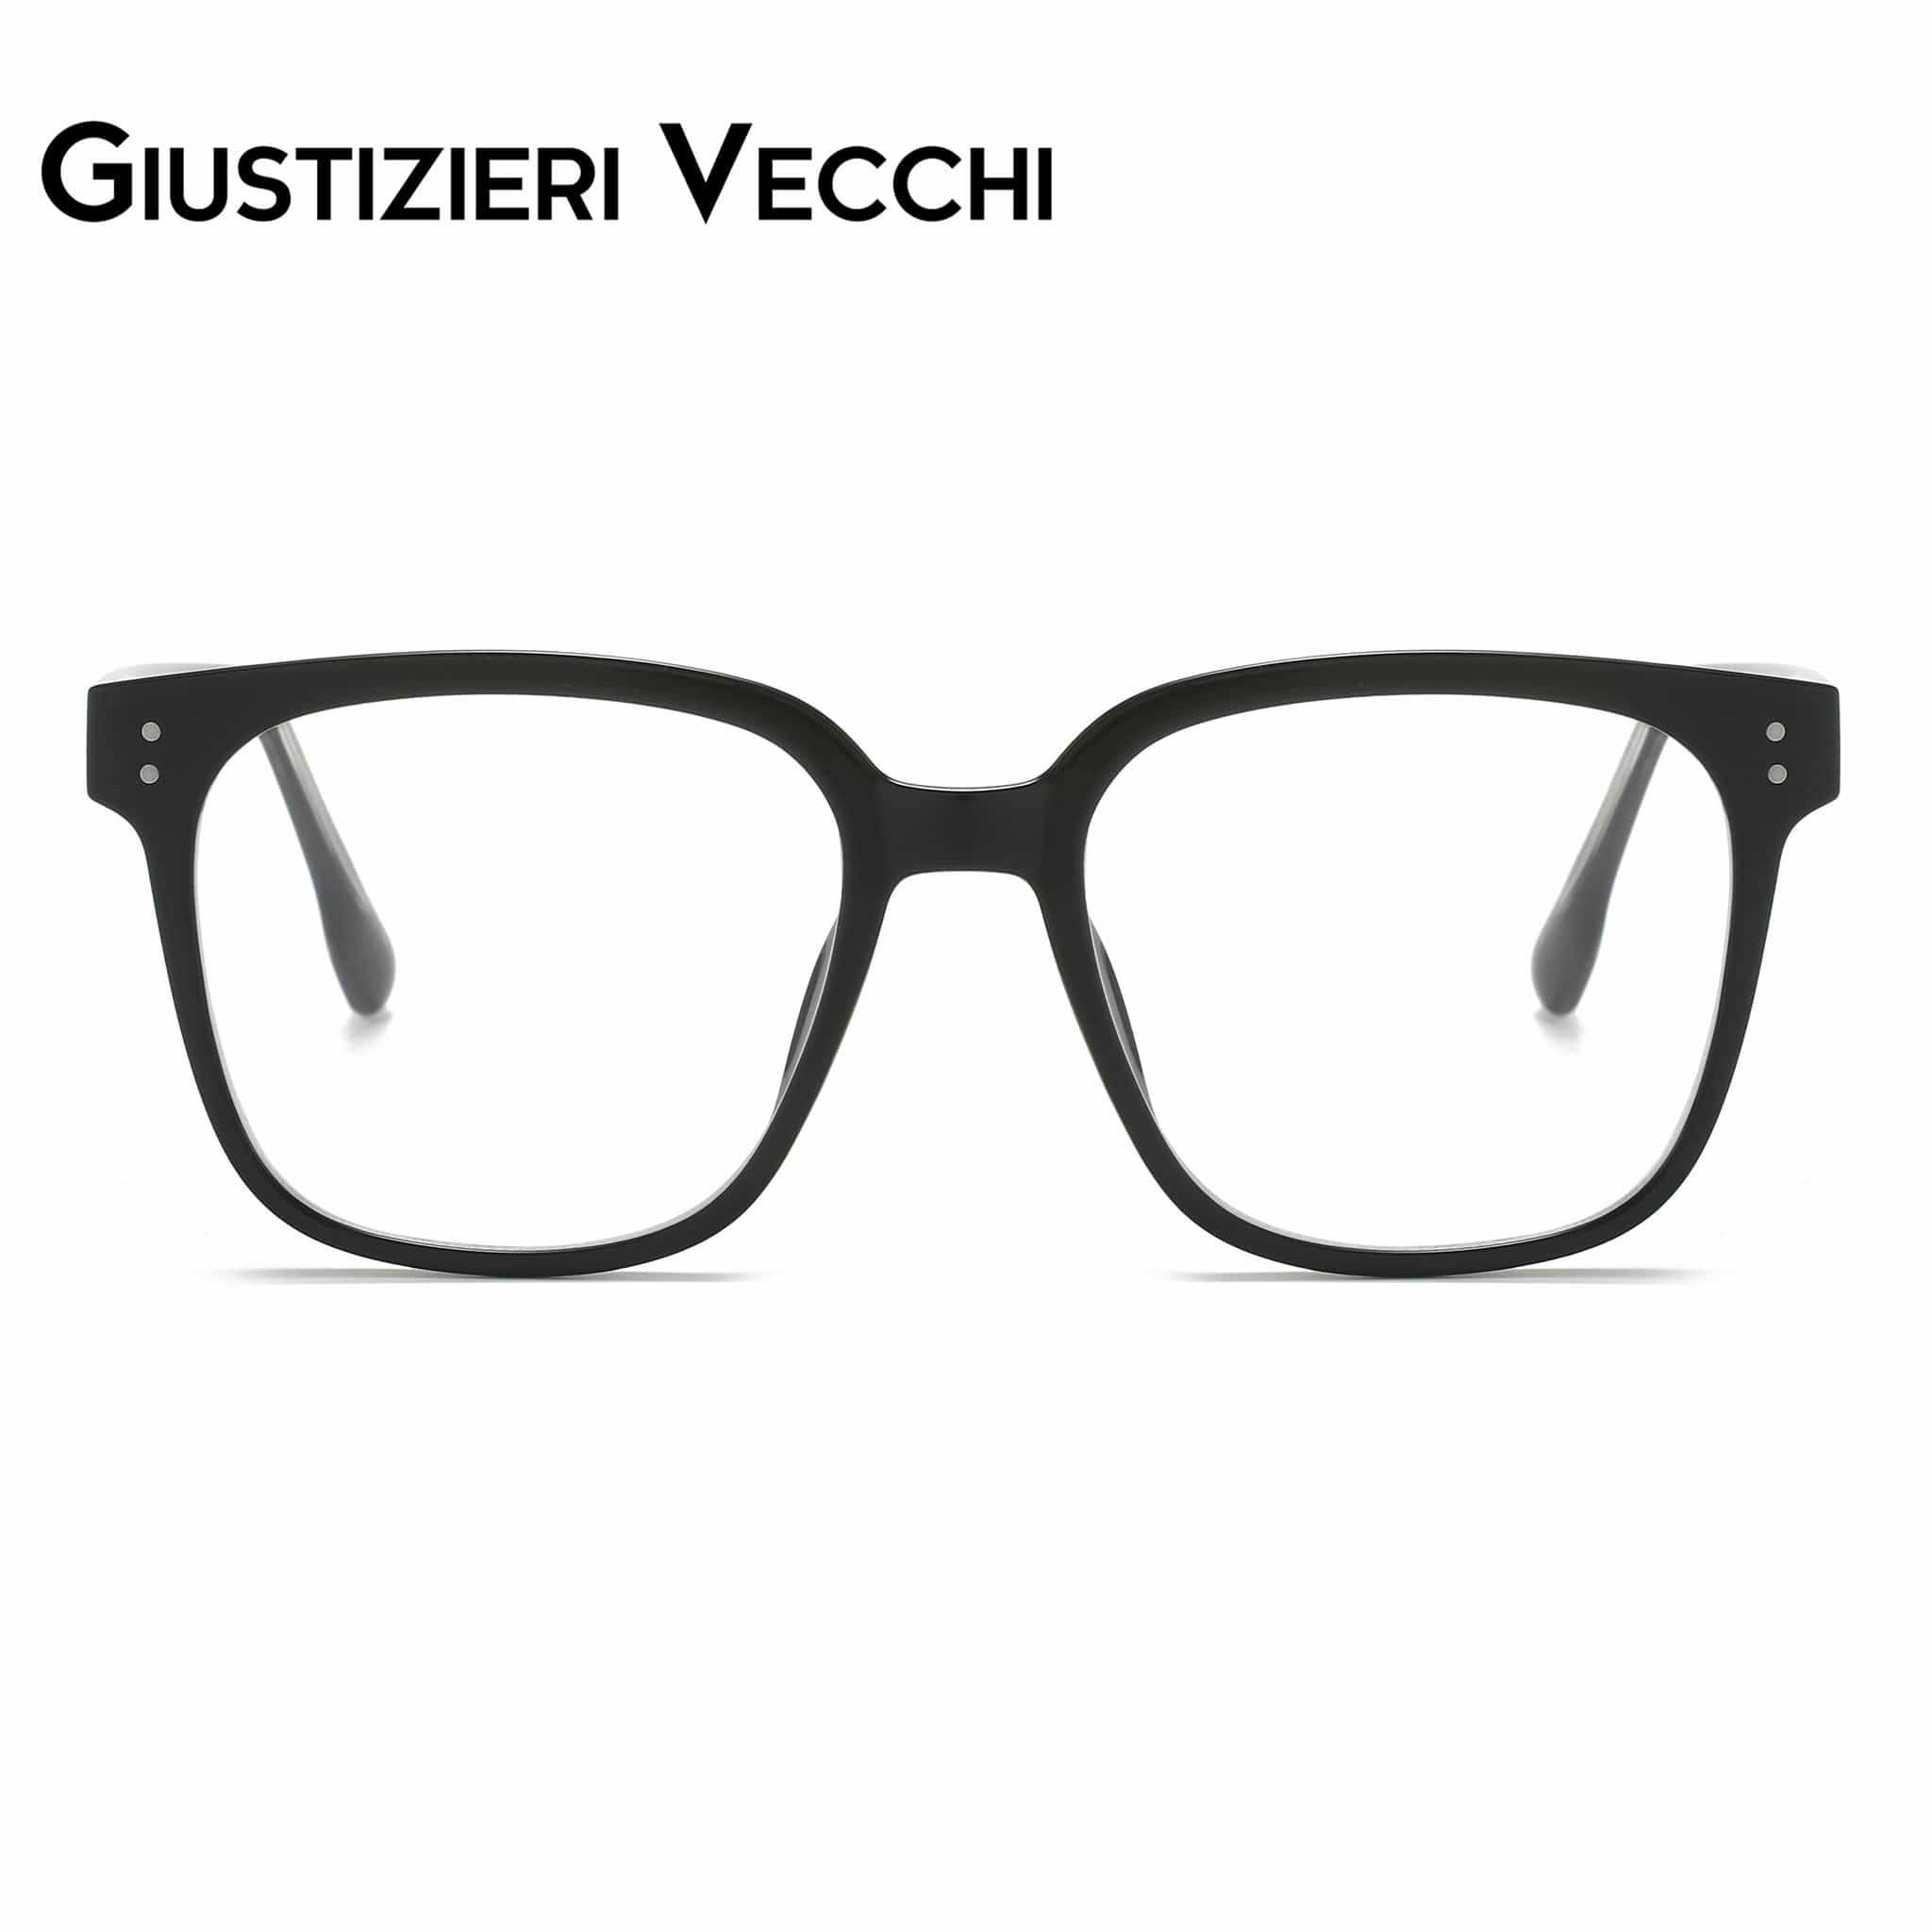 GIUSTIZIERI VECCHI Eyeglasses Medium / Black Mystic Moon Uno